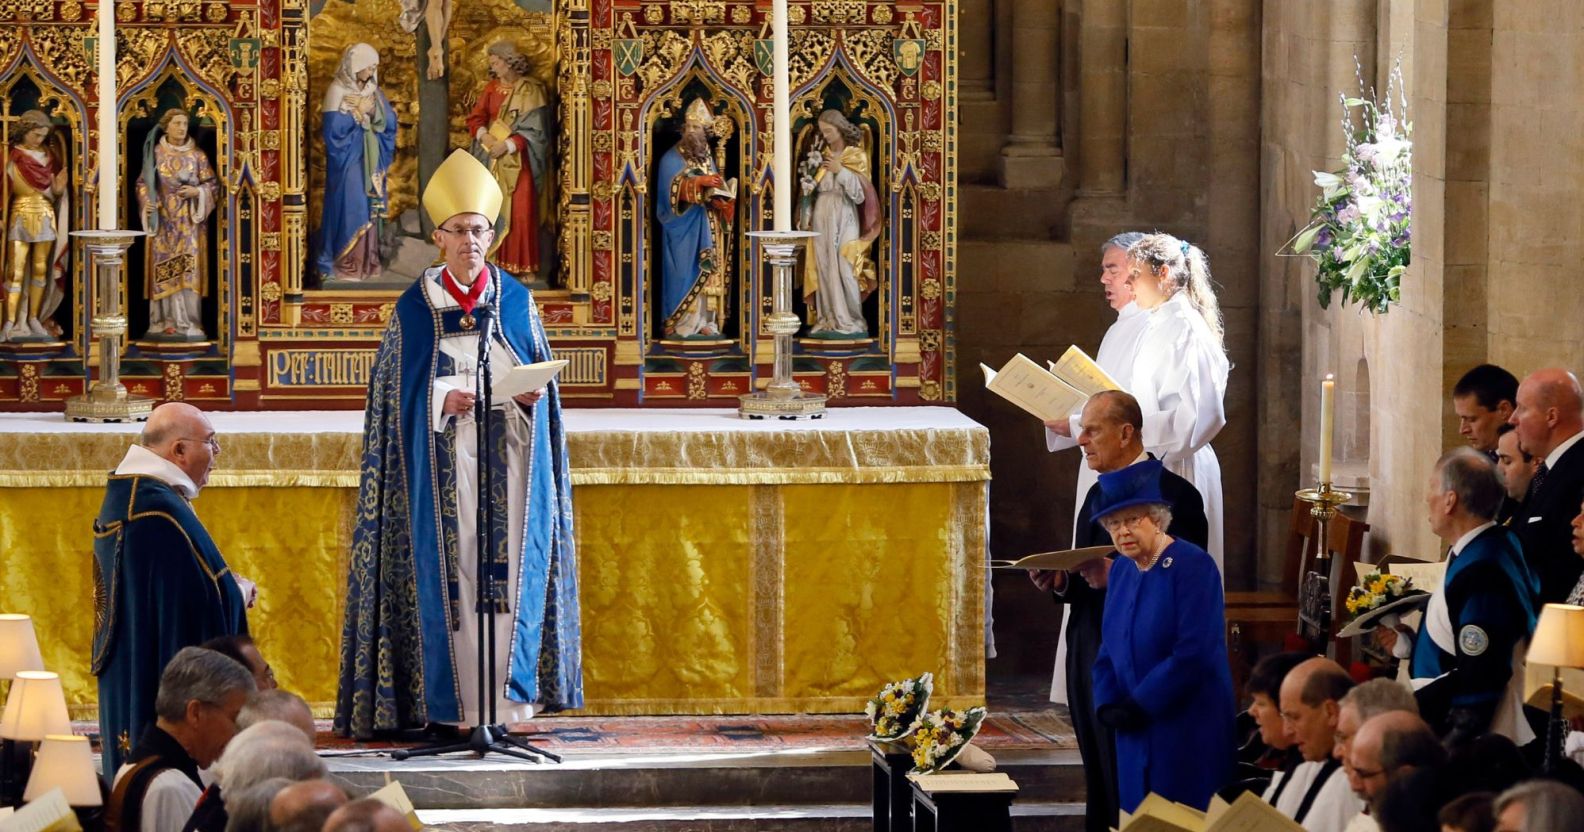 Bishop of Worcester Dr John Inge conducts a service